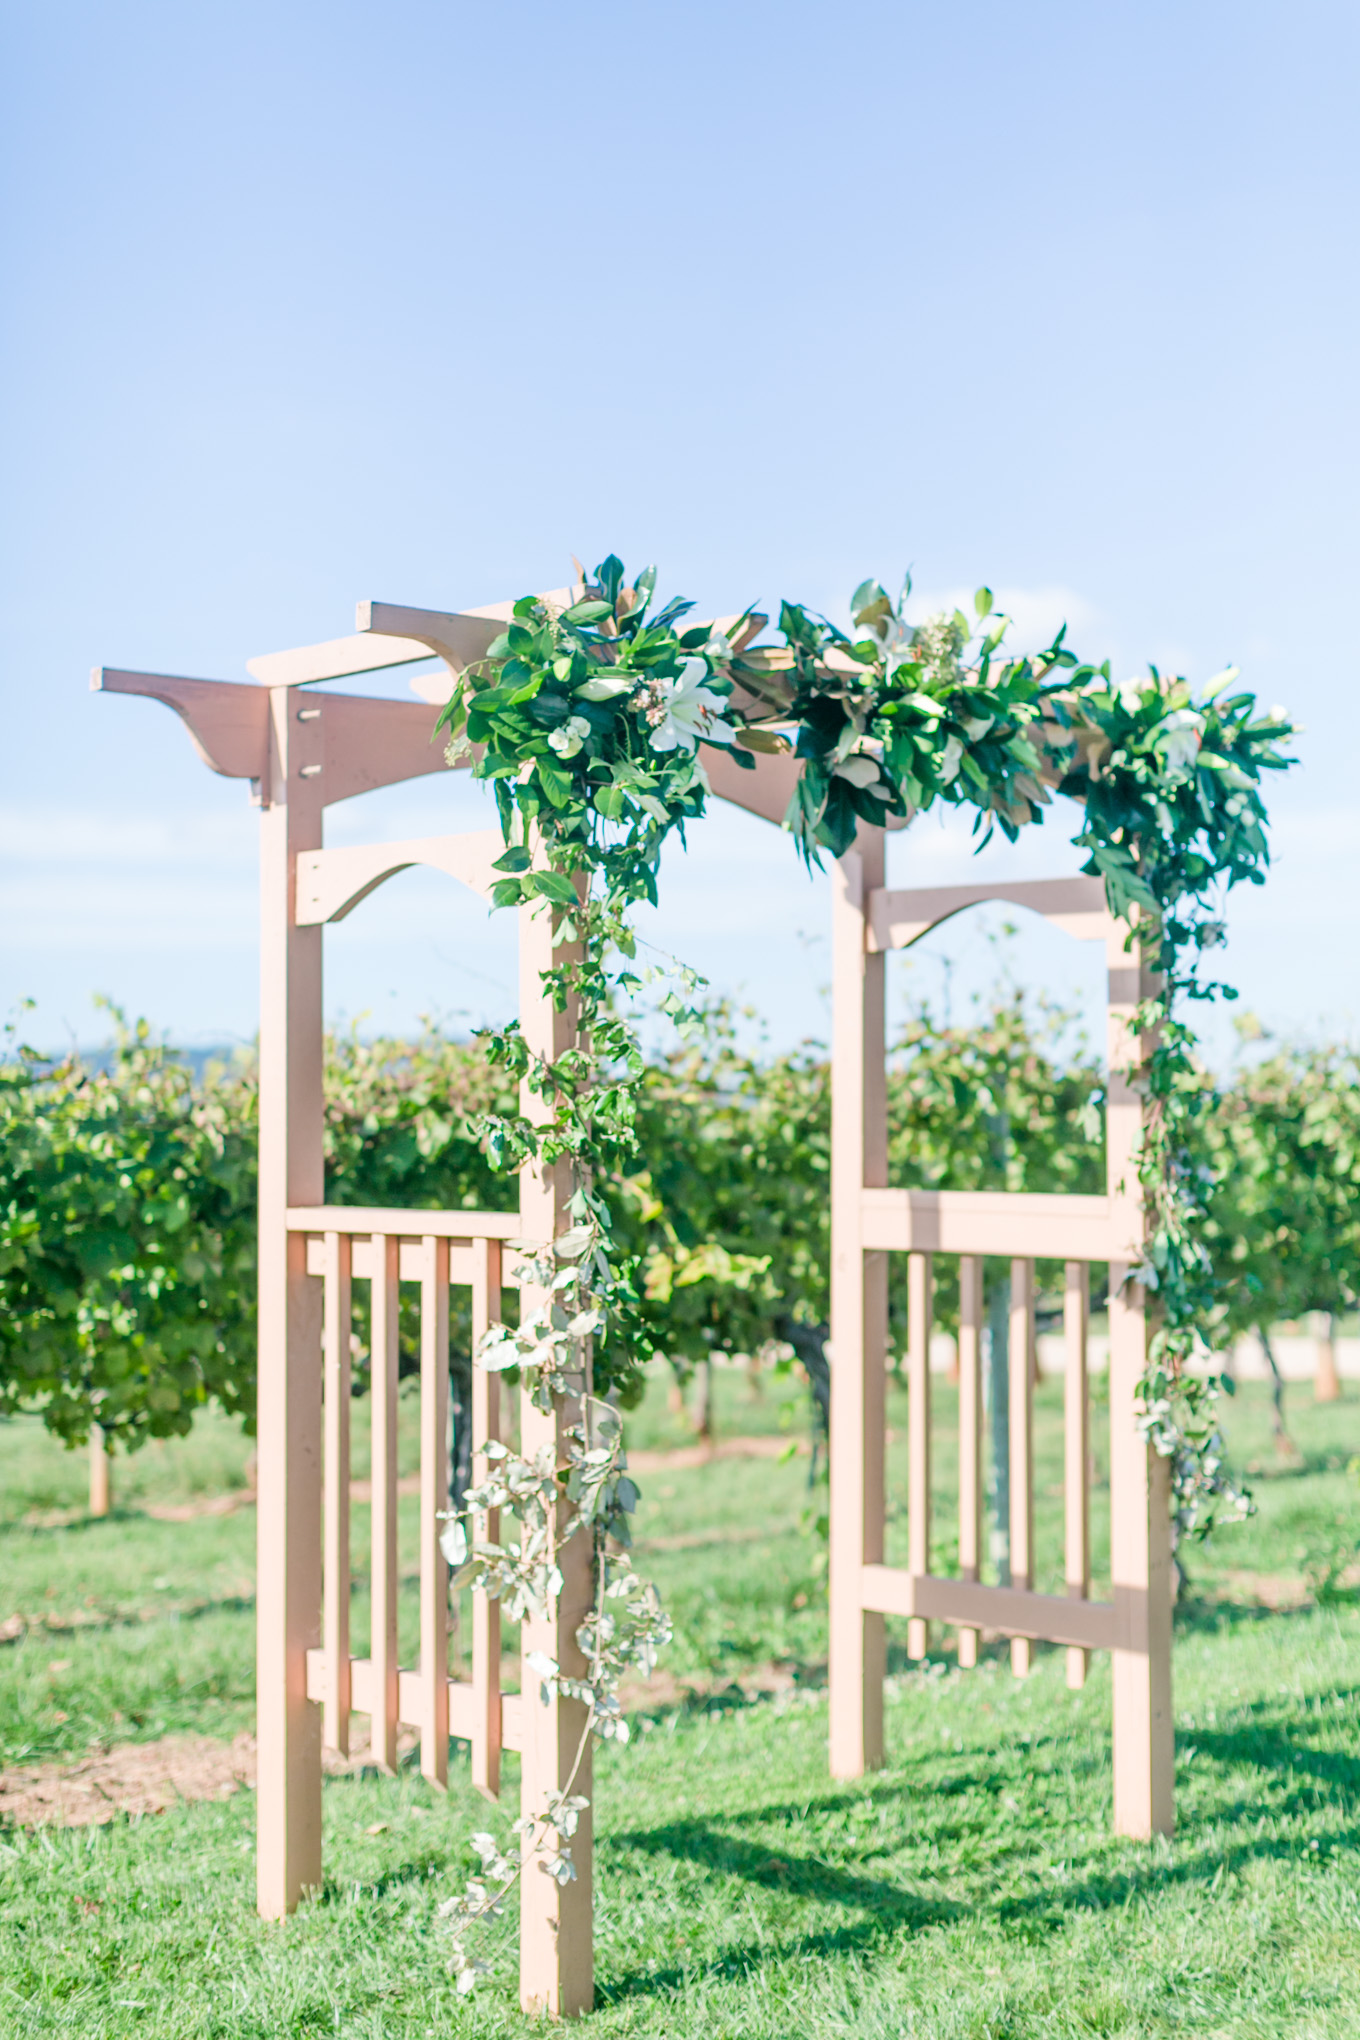 Keswick Vineyards summer wedding, Keswick Vineyards, outdoor wedding ceremony, vineyard wedding, wedding arch, Secret Garden florals